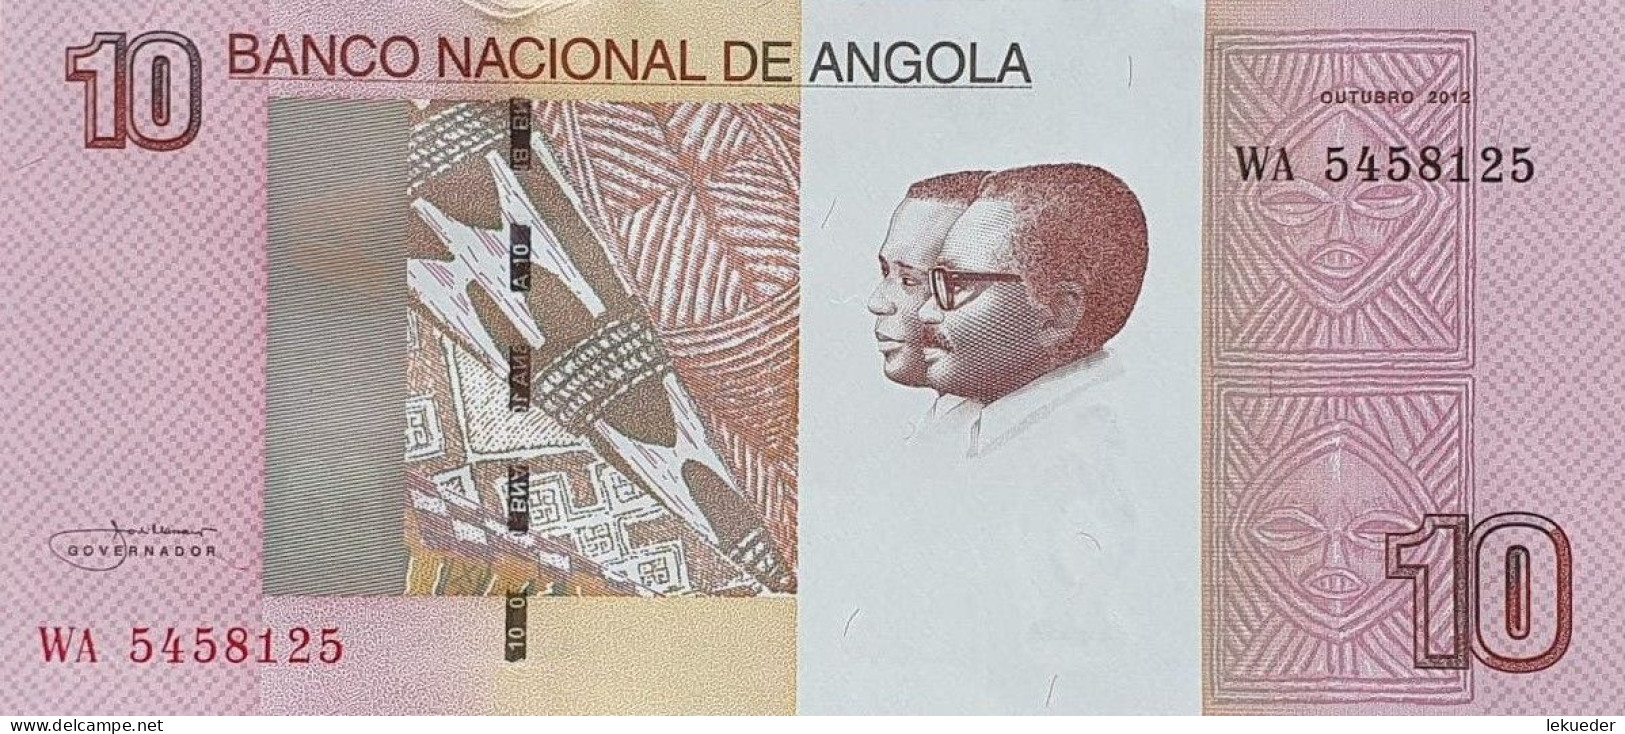 Billete De Banco De ANGOLA - 10 Kwanzas, 2012  Sin Cursar - Angola